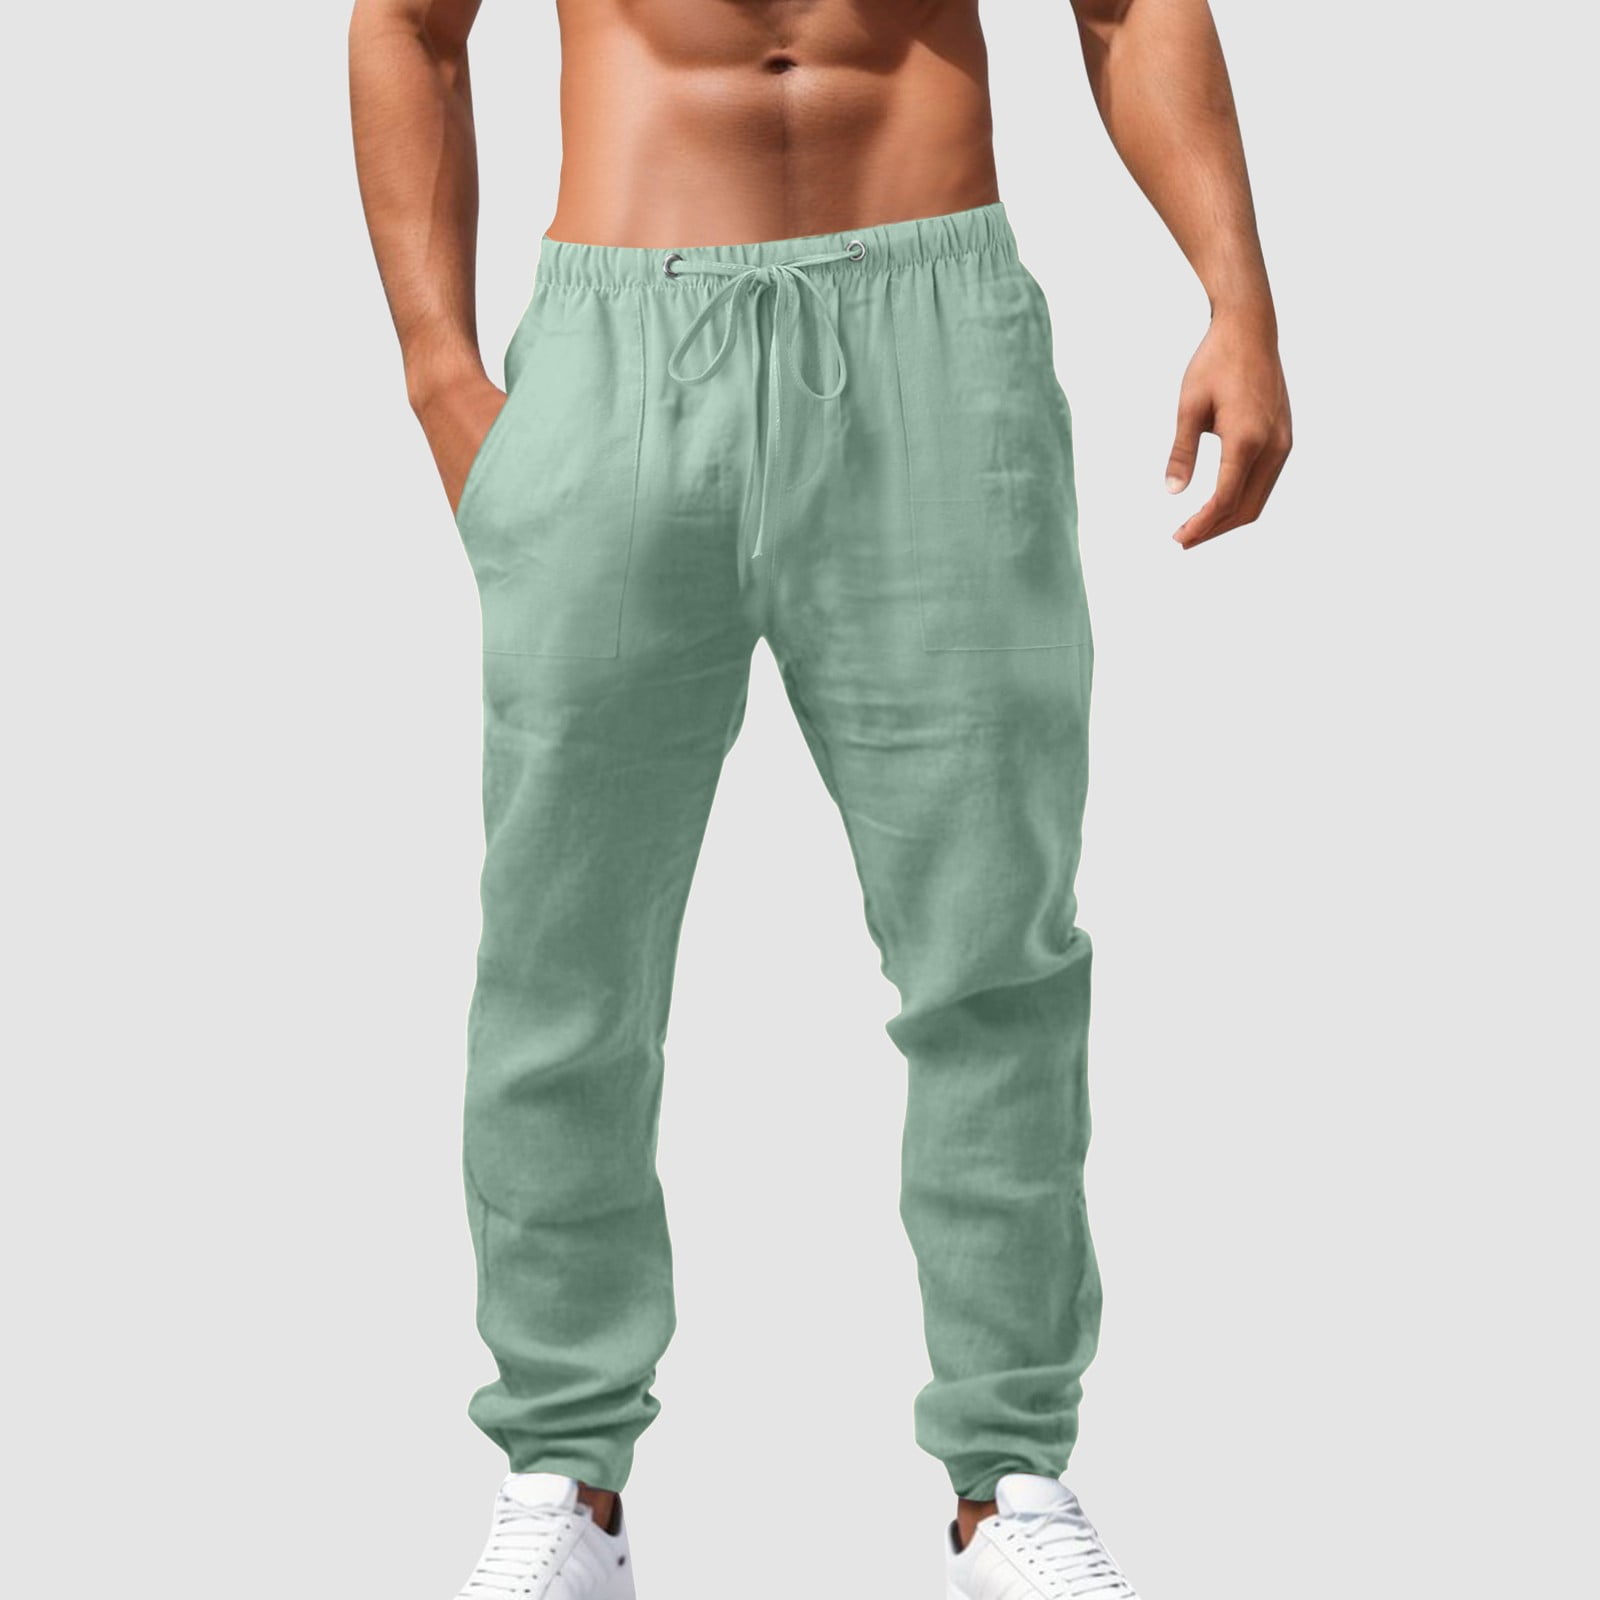 YUHAOTIN Joggers for Men Green Men's Casual Stripe Skinny Pencil Pants  Zipper Elastic Waist Pants Trousers Lined Sweatpants Men Sweatpants Men  Tall